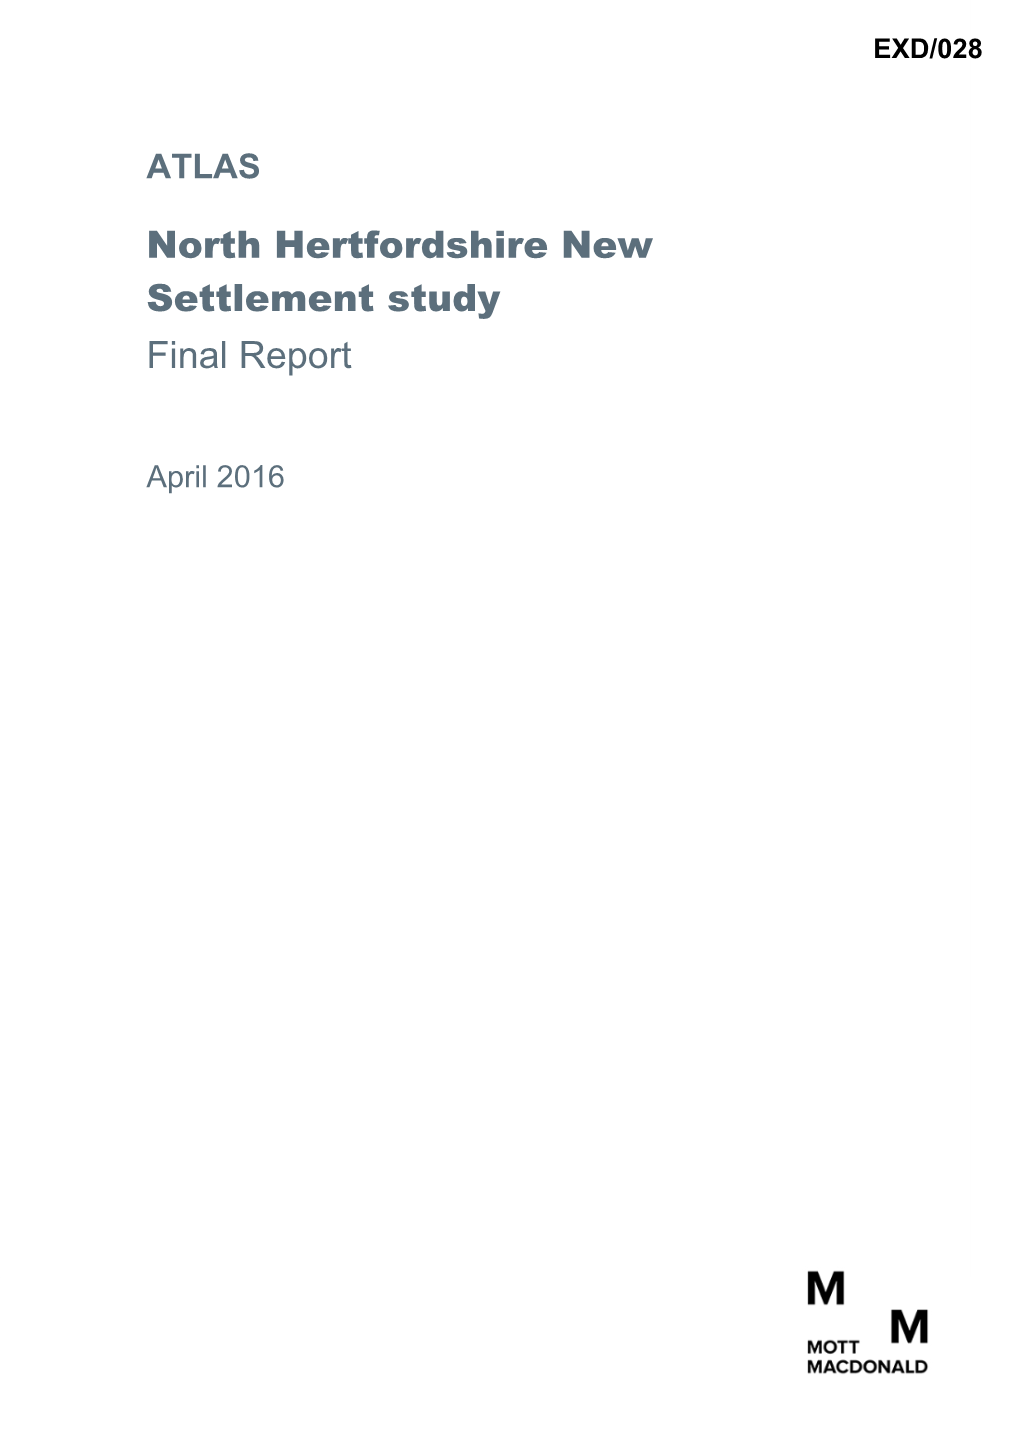 North Hertfordshire New Settlement Study Final Report